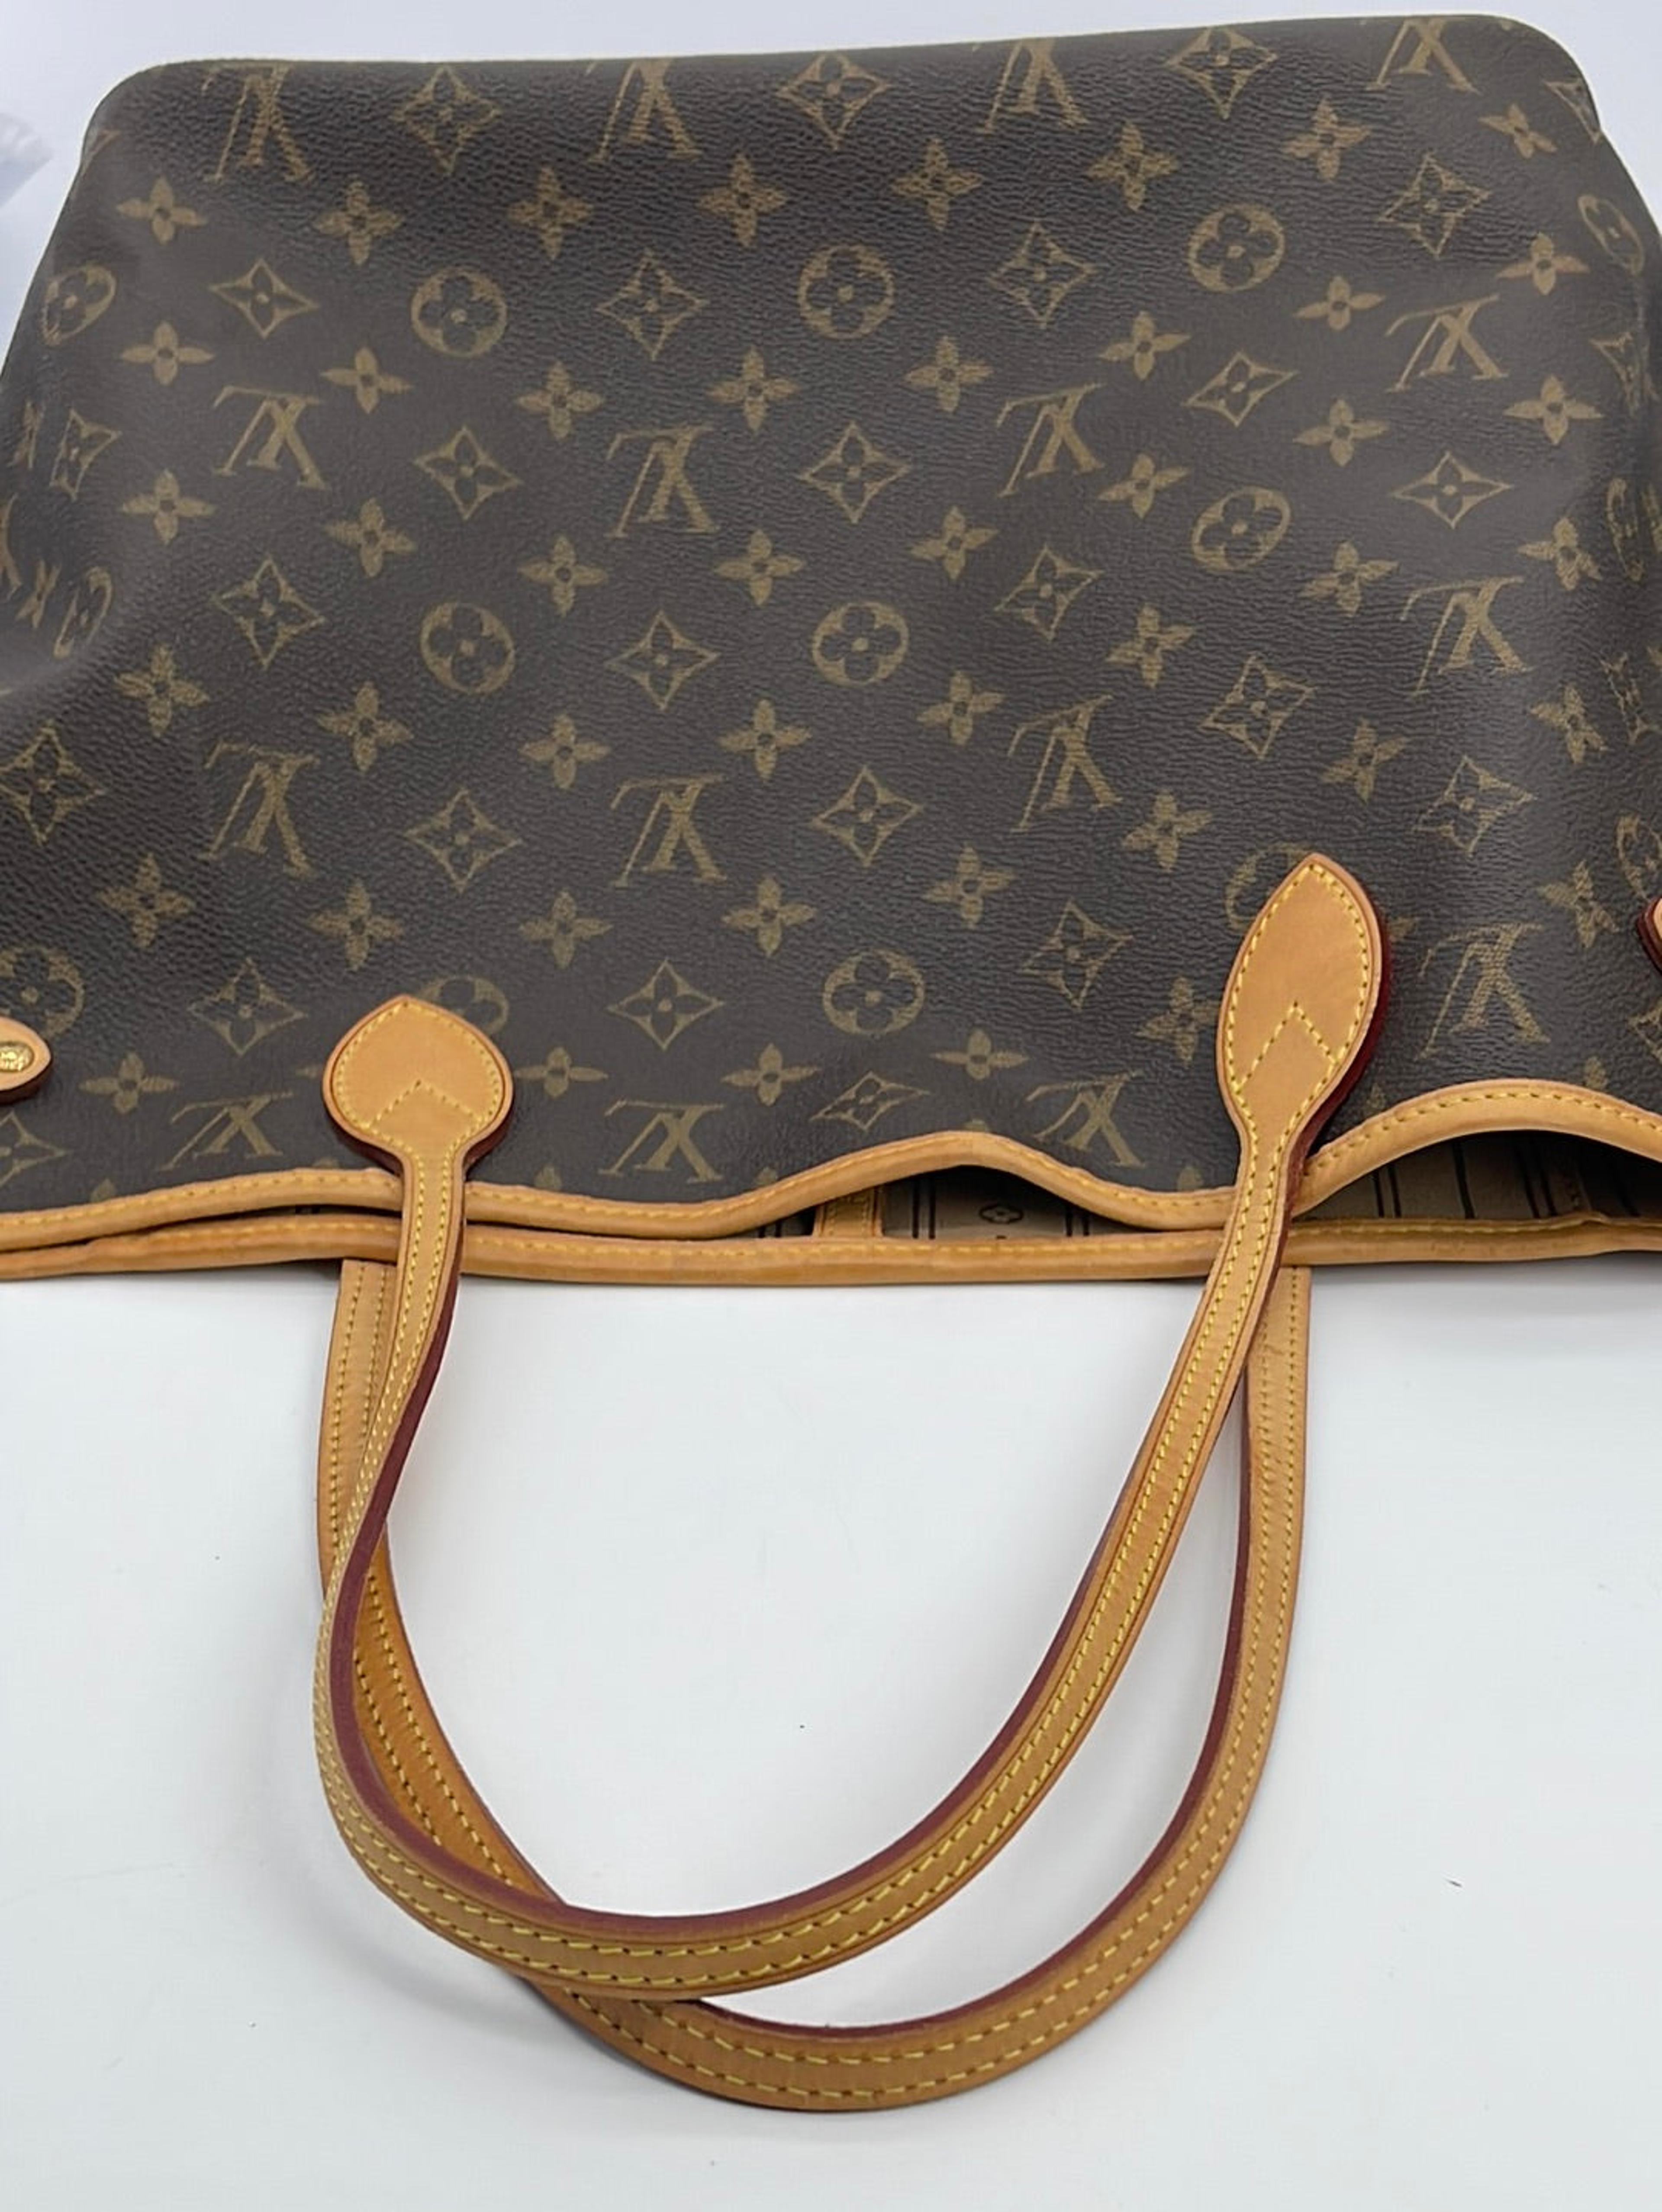 Preloved Louis Vuitton Monogram Neverfull MM Tote Bag (beige pink interior)  AR1068 063023